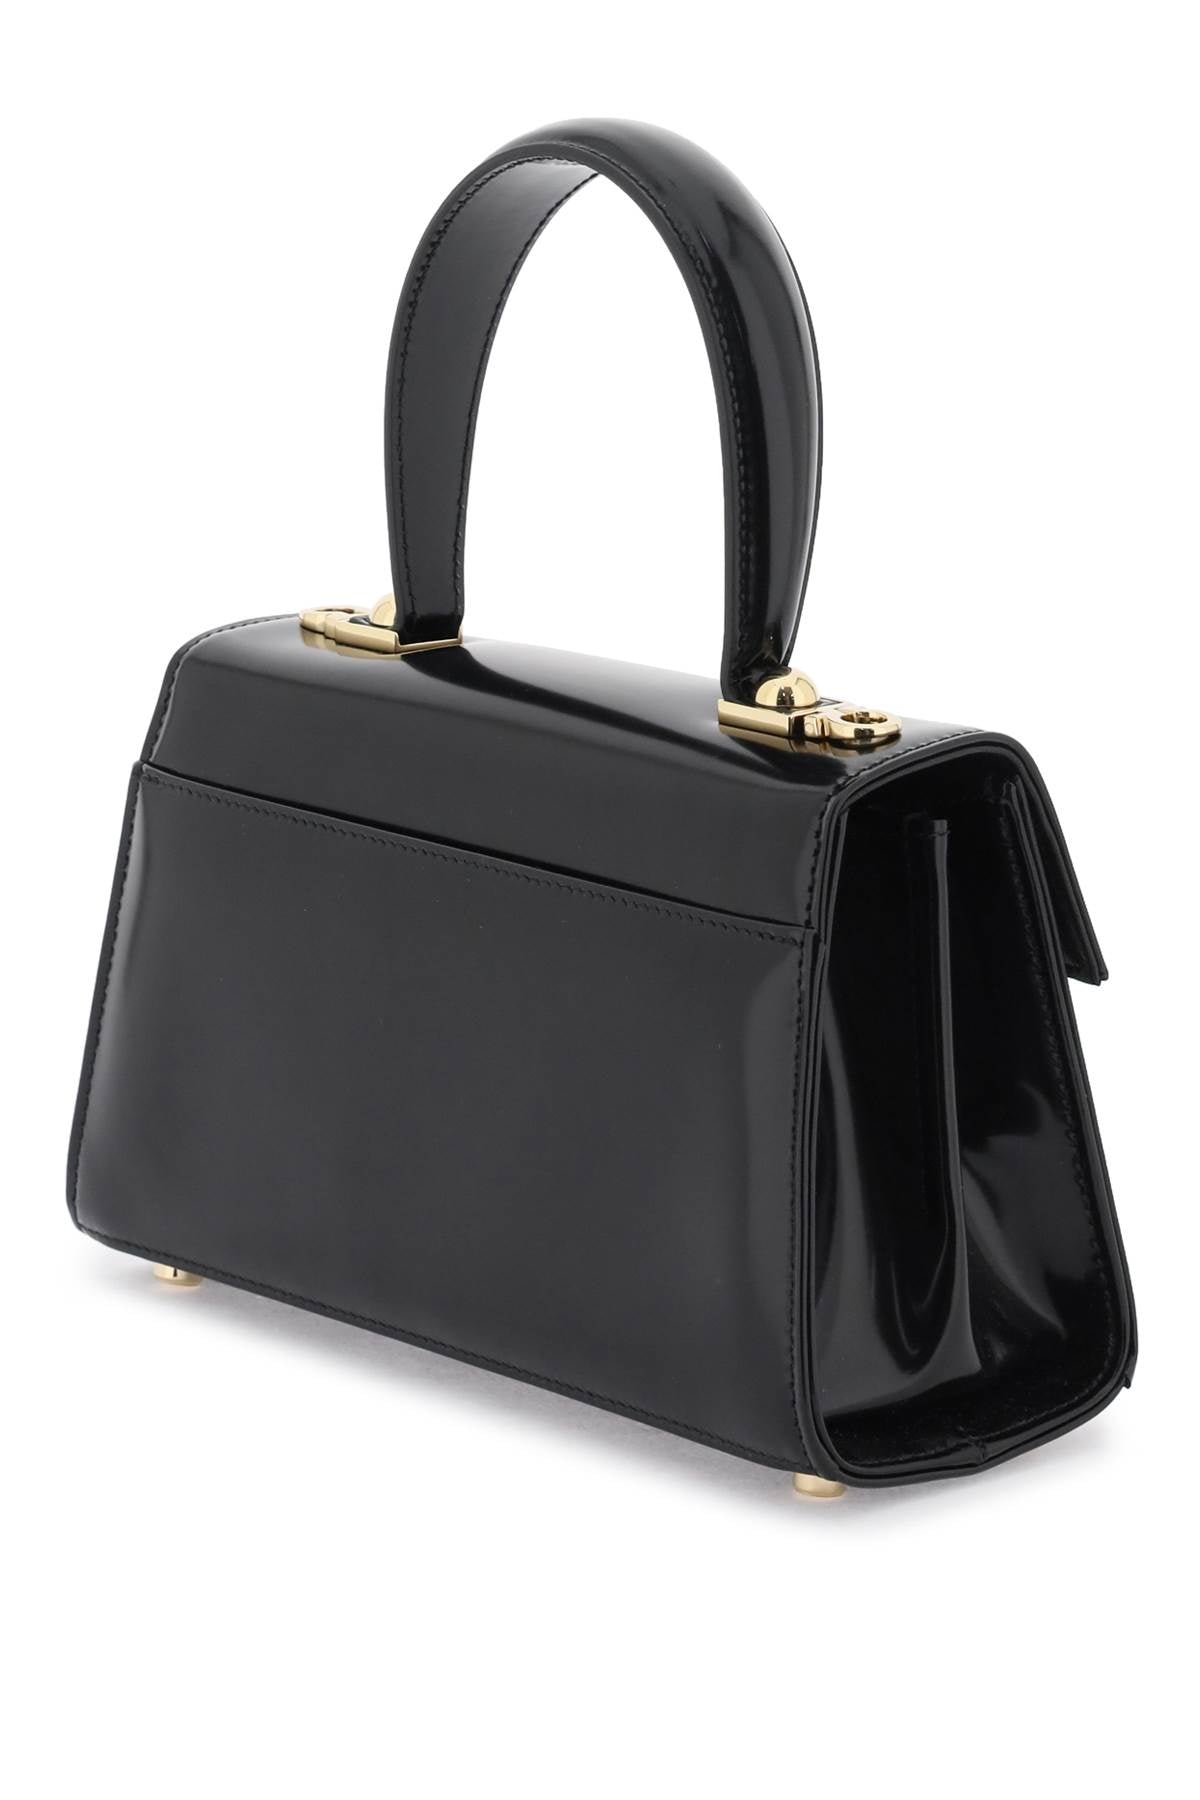 FERRAGAMO Stylish Iconic Leather Handbag for Women - Black FW24